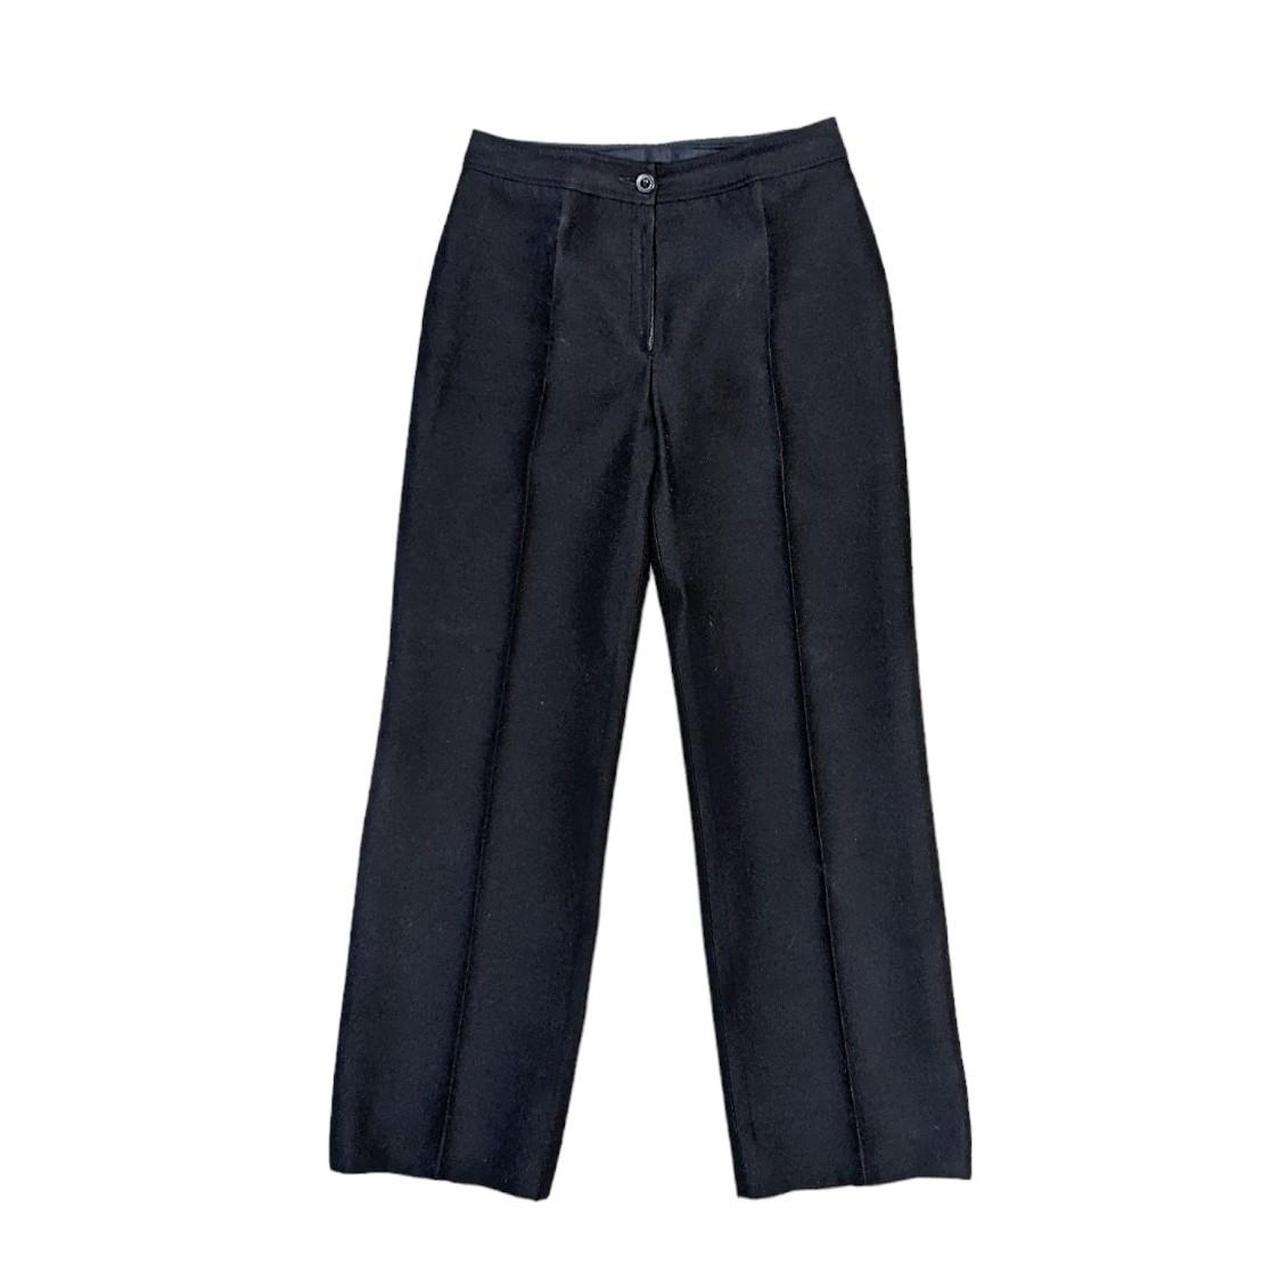 Vintage Suit Trousers 👖 Super straight, slightly... - Depop